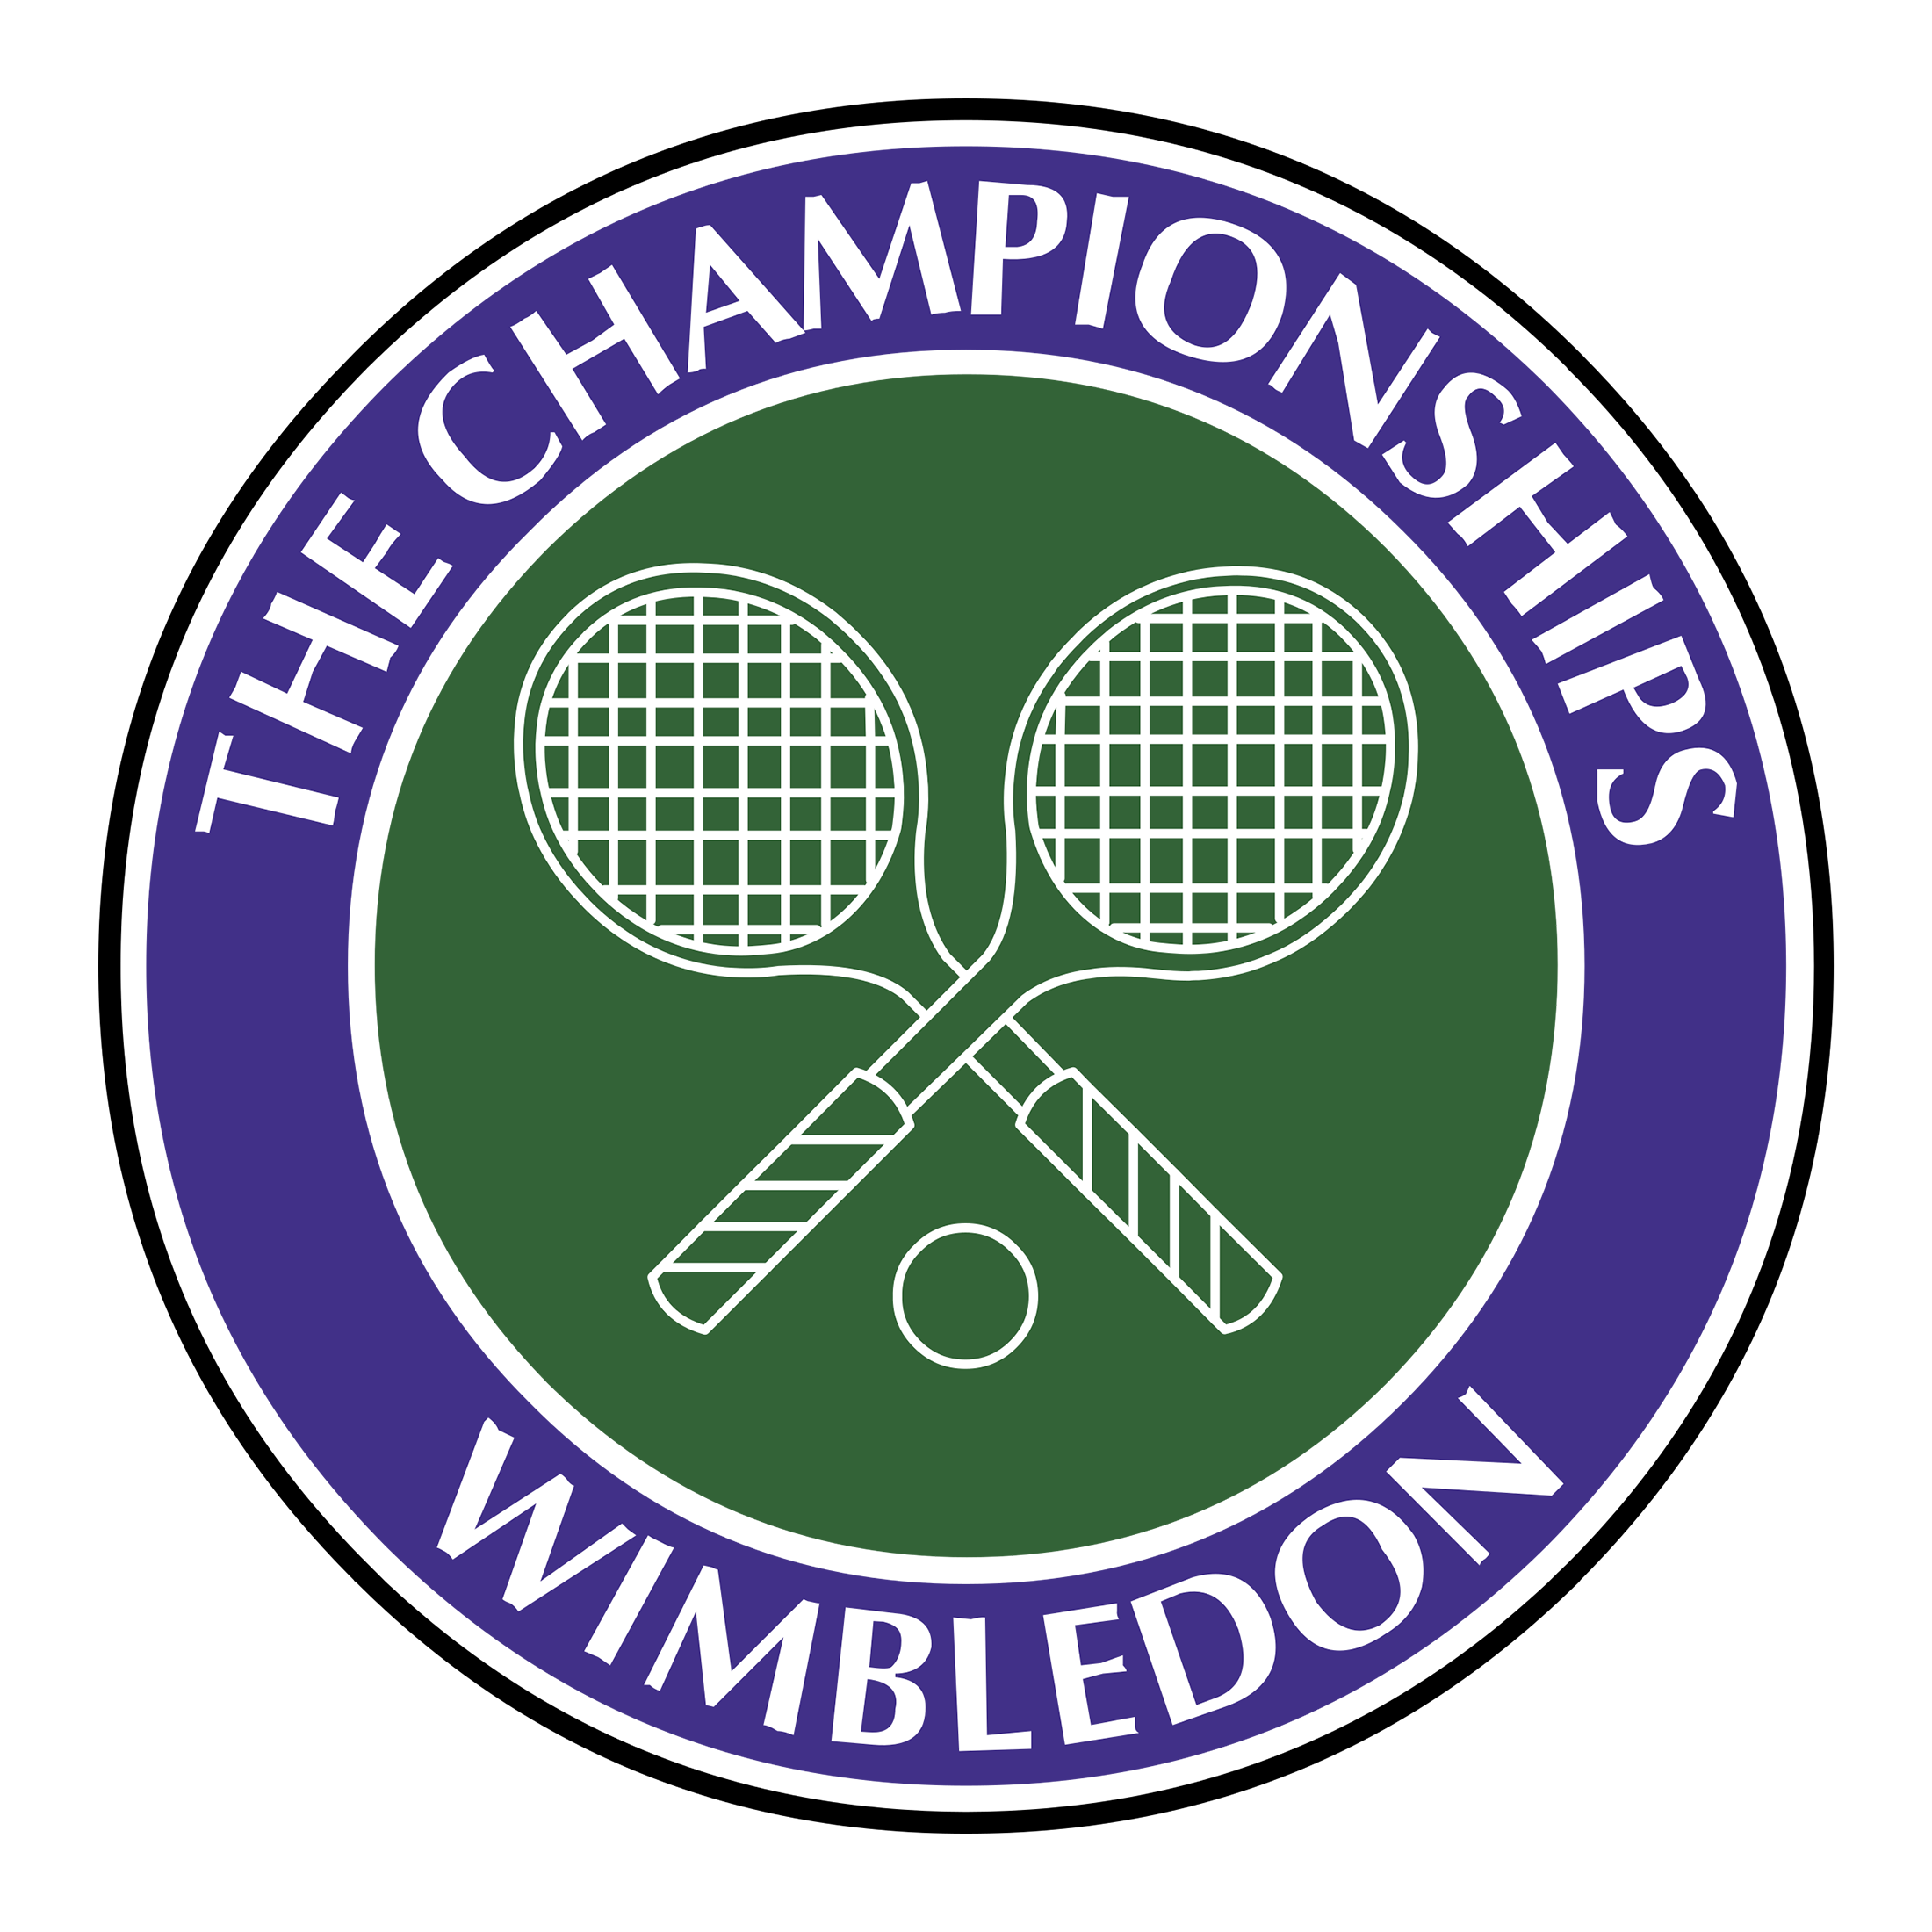 The Championships Wimbledon logo